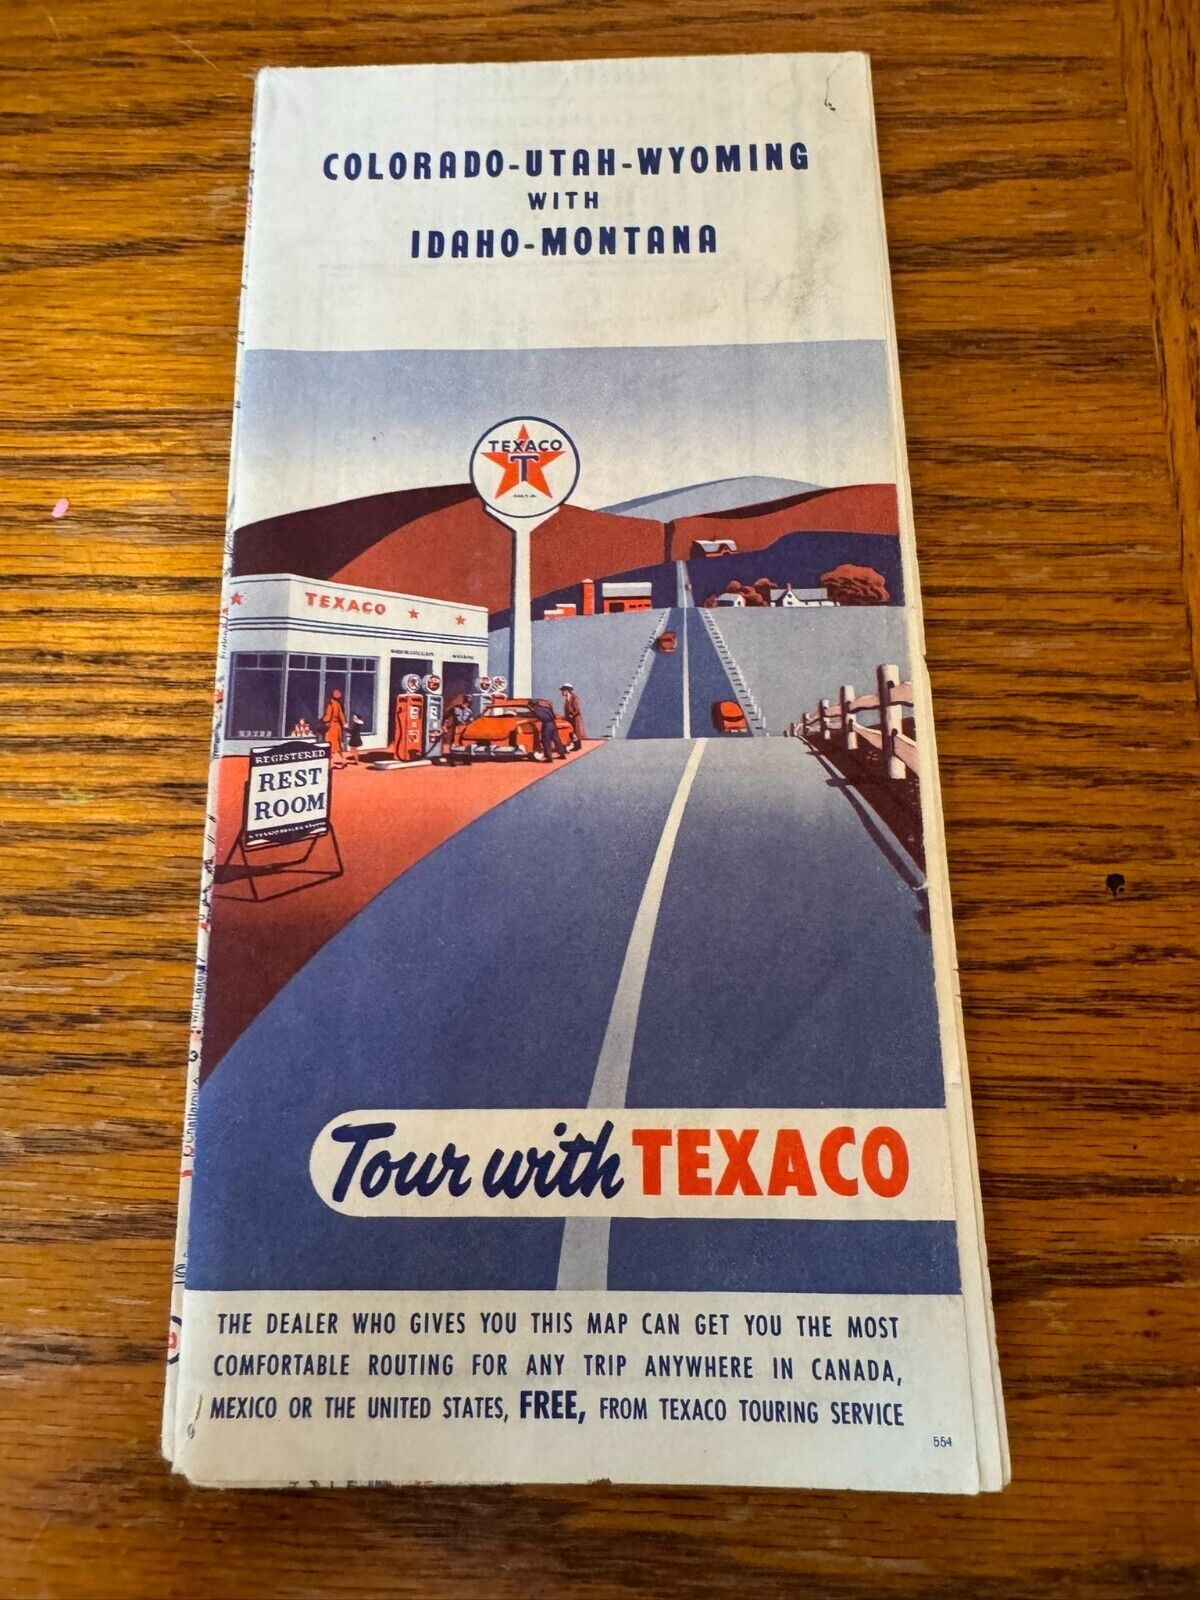 1954 Vintage Texaco Map of Colorado-Utah-Wyoming with Idaho-Montana